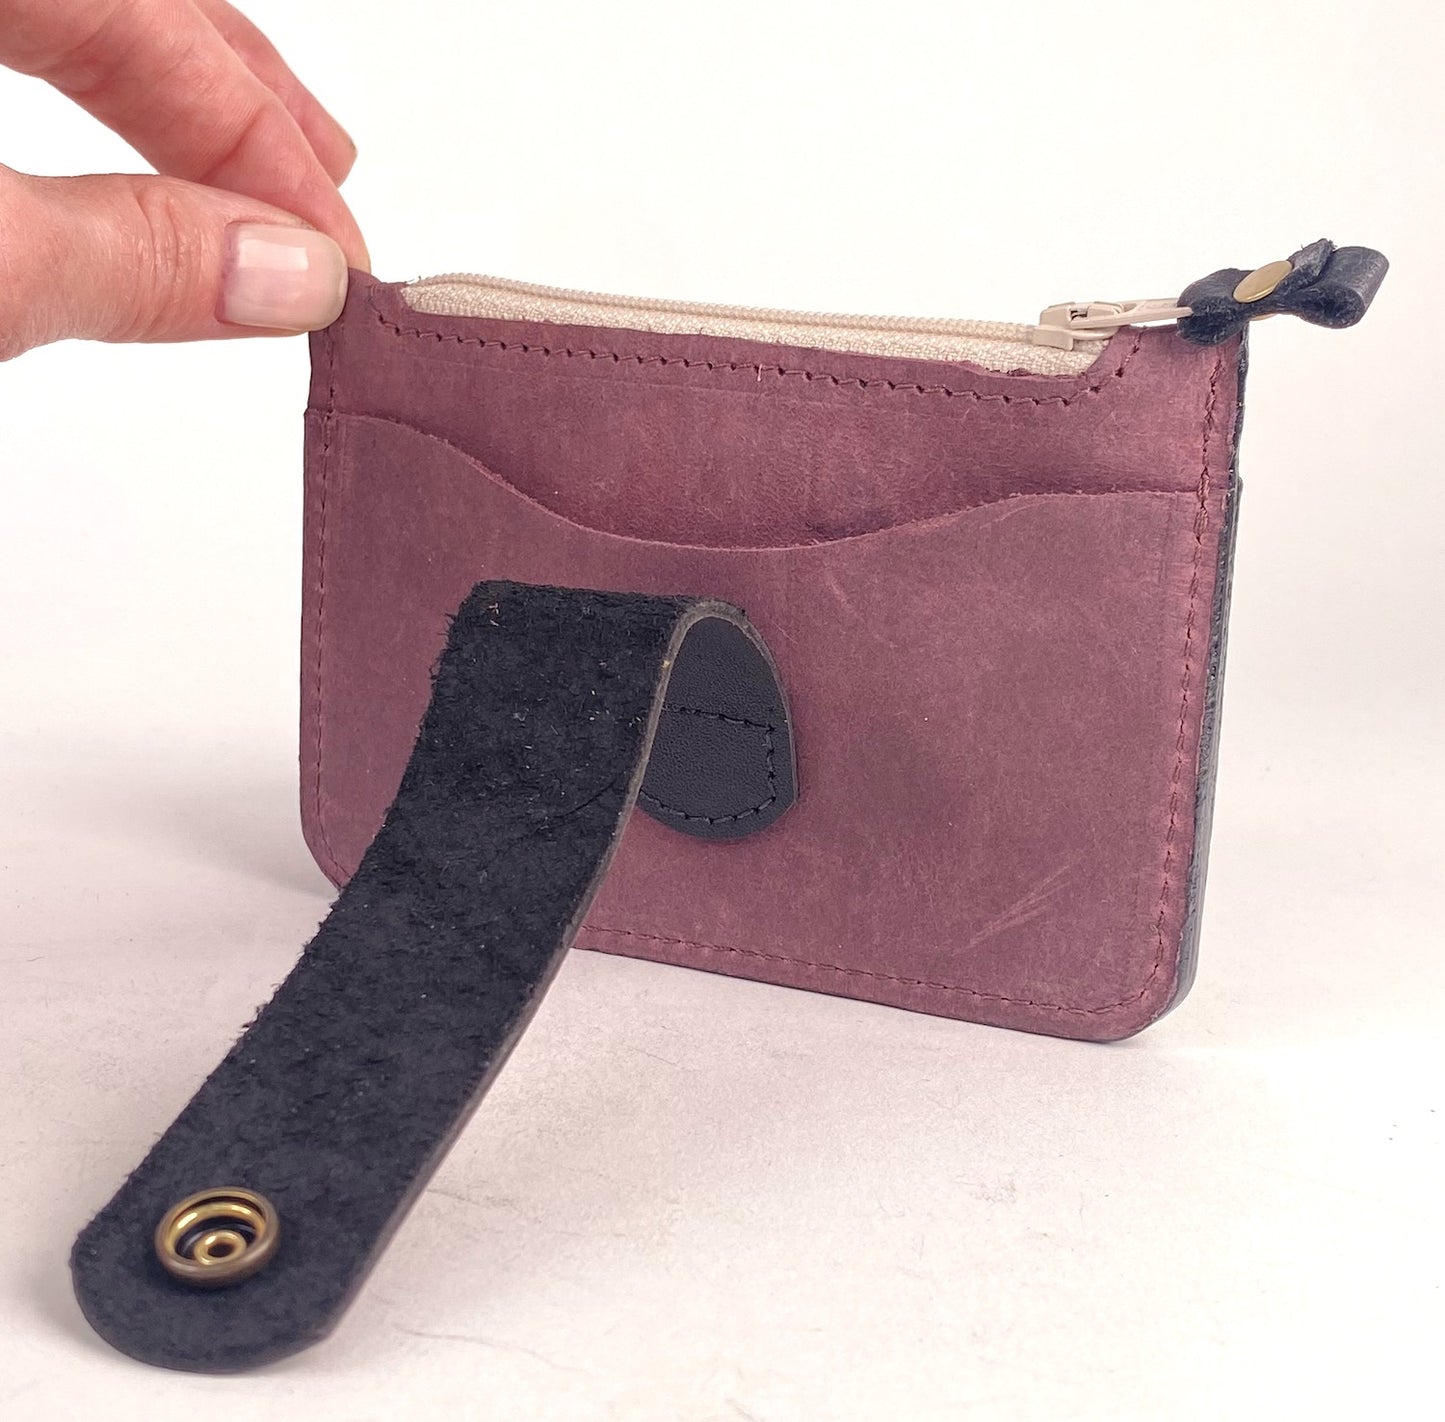 CardGuard Minimalist Leather Wallet in Plum Purple